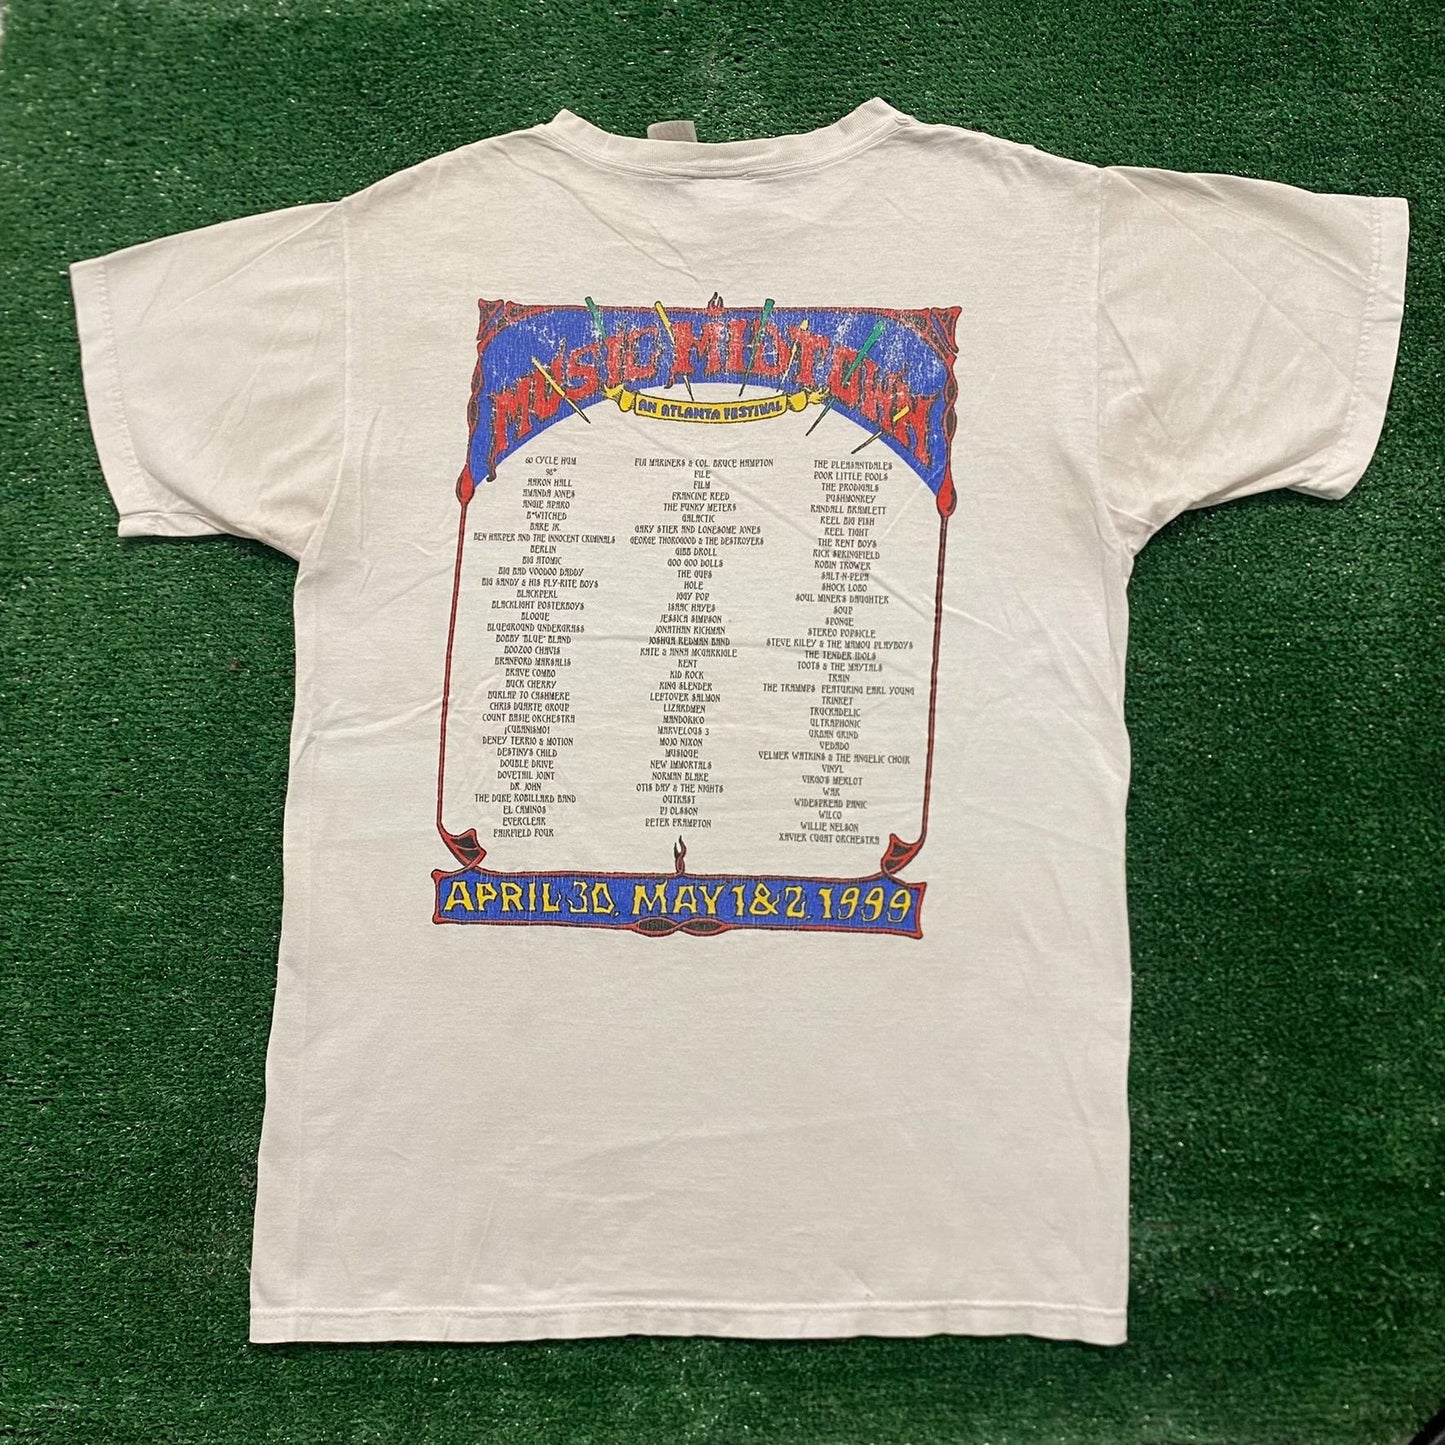 Vintage 90s Essential Atlanta Festival Staff Band T-Shirt